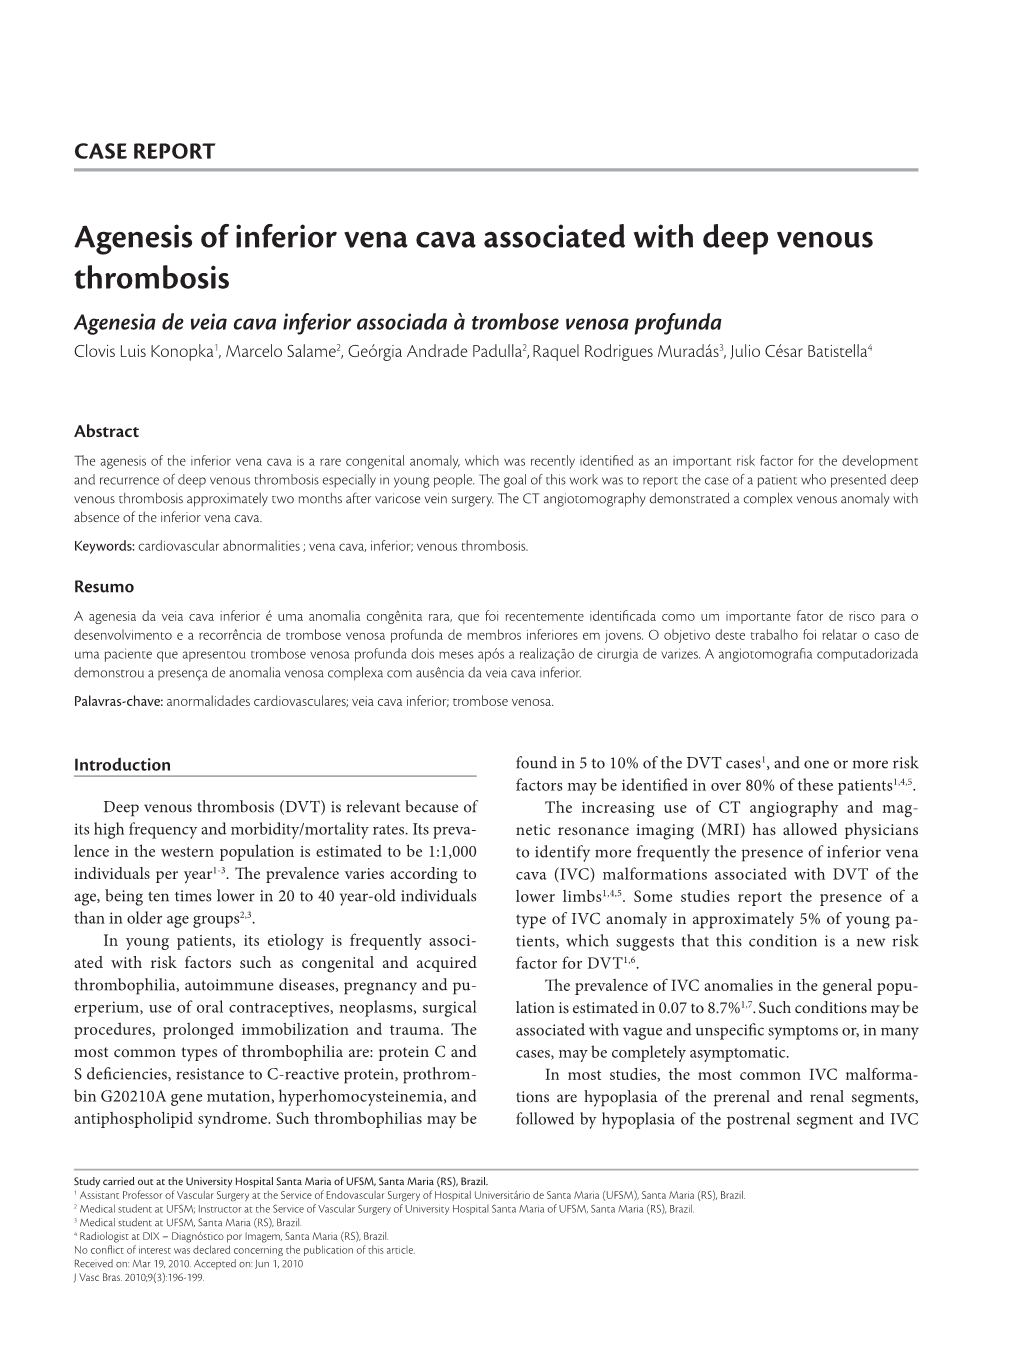 Agenesis of Inferior Vena Cava Associated with Deep Venous